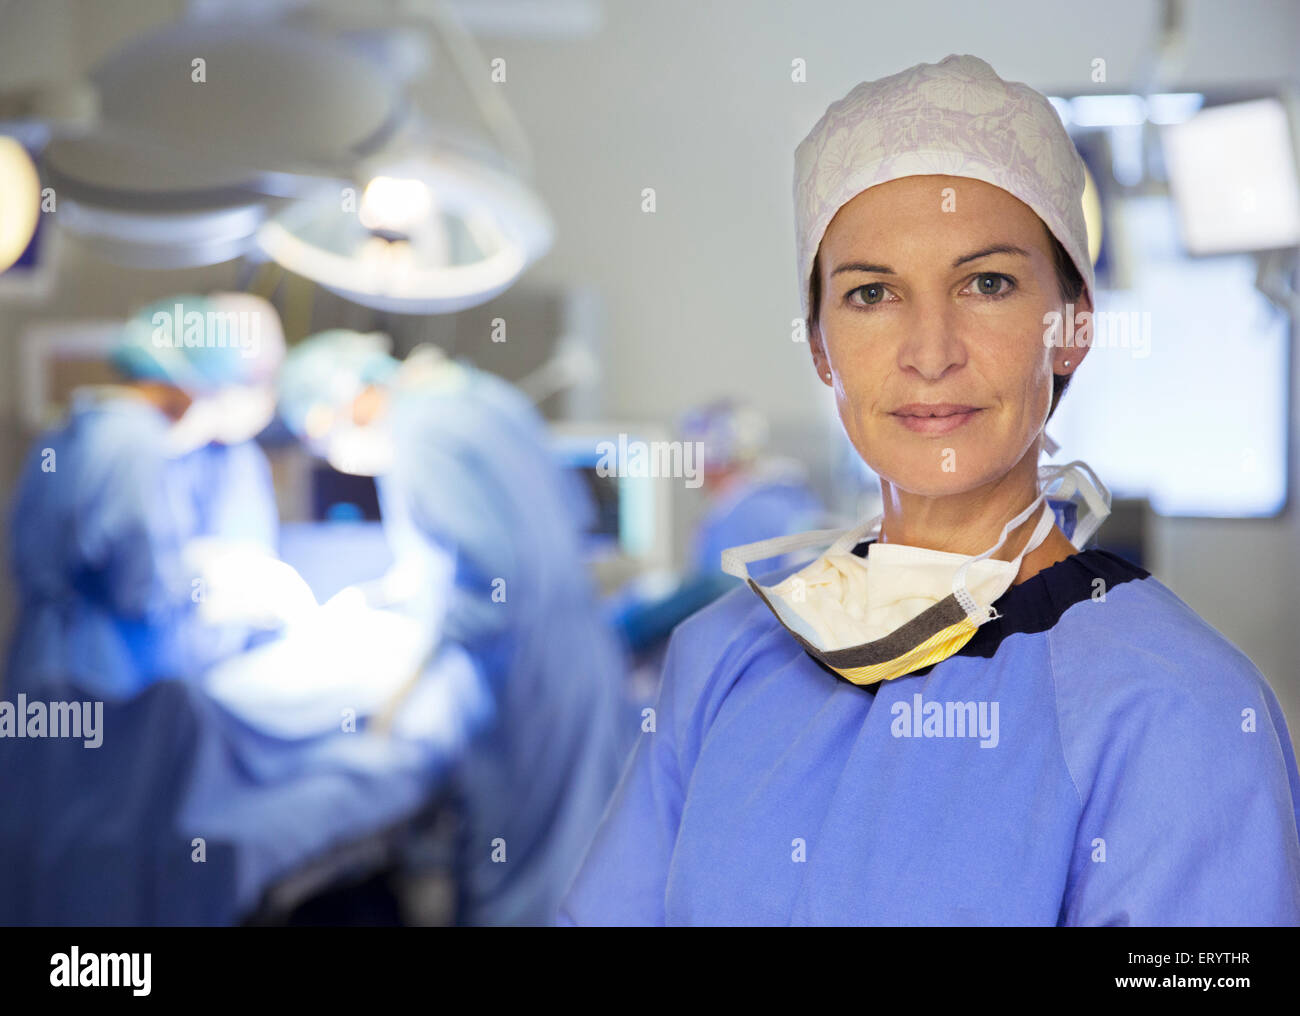 Portrait of confident surgeon in operating room Stock Photo